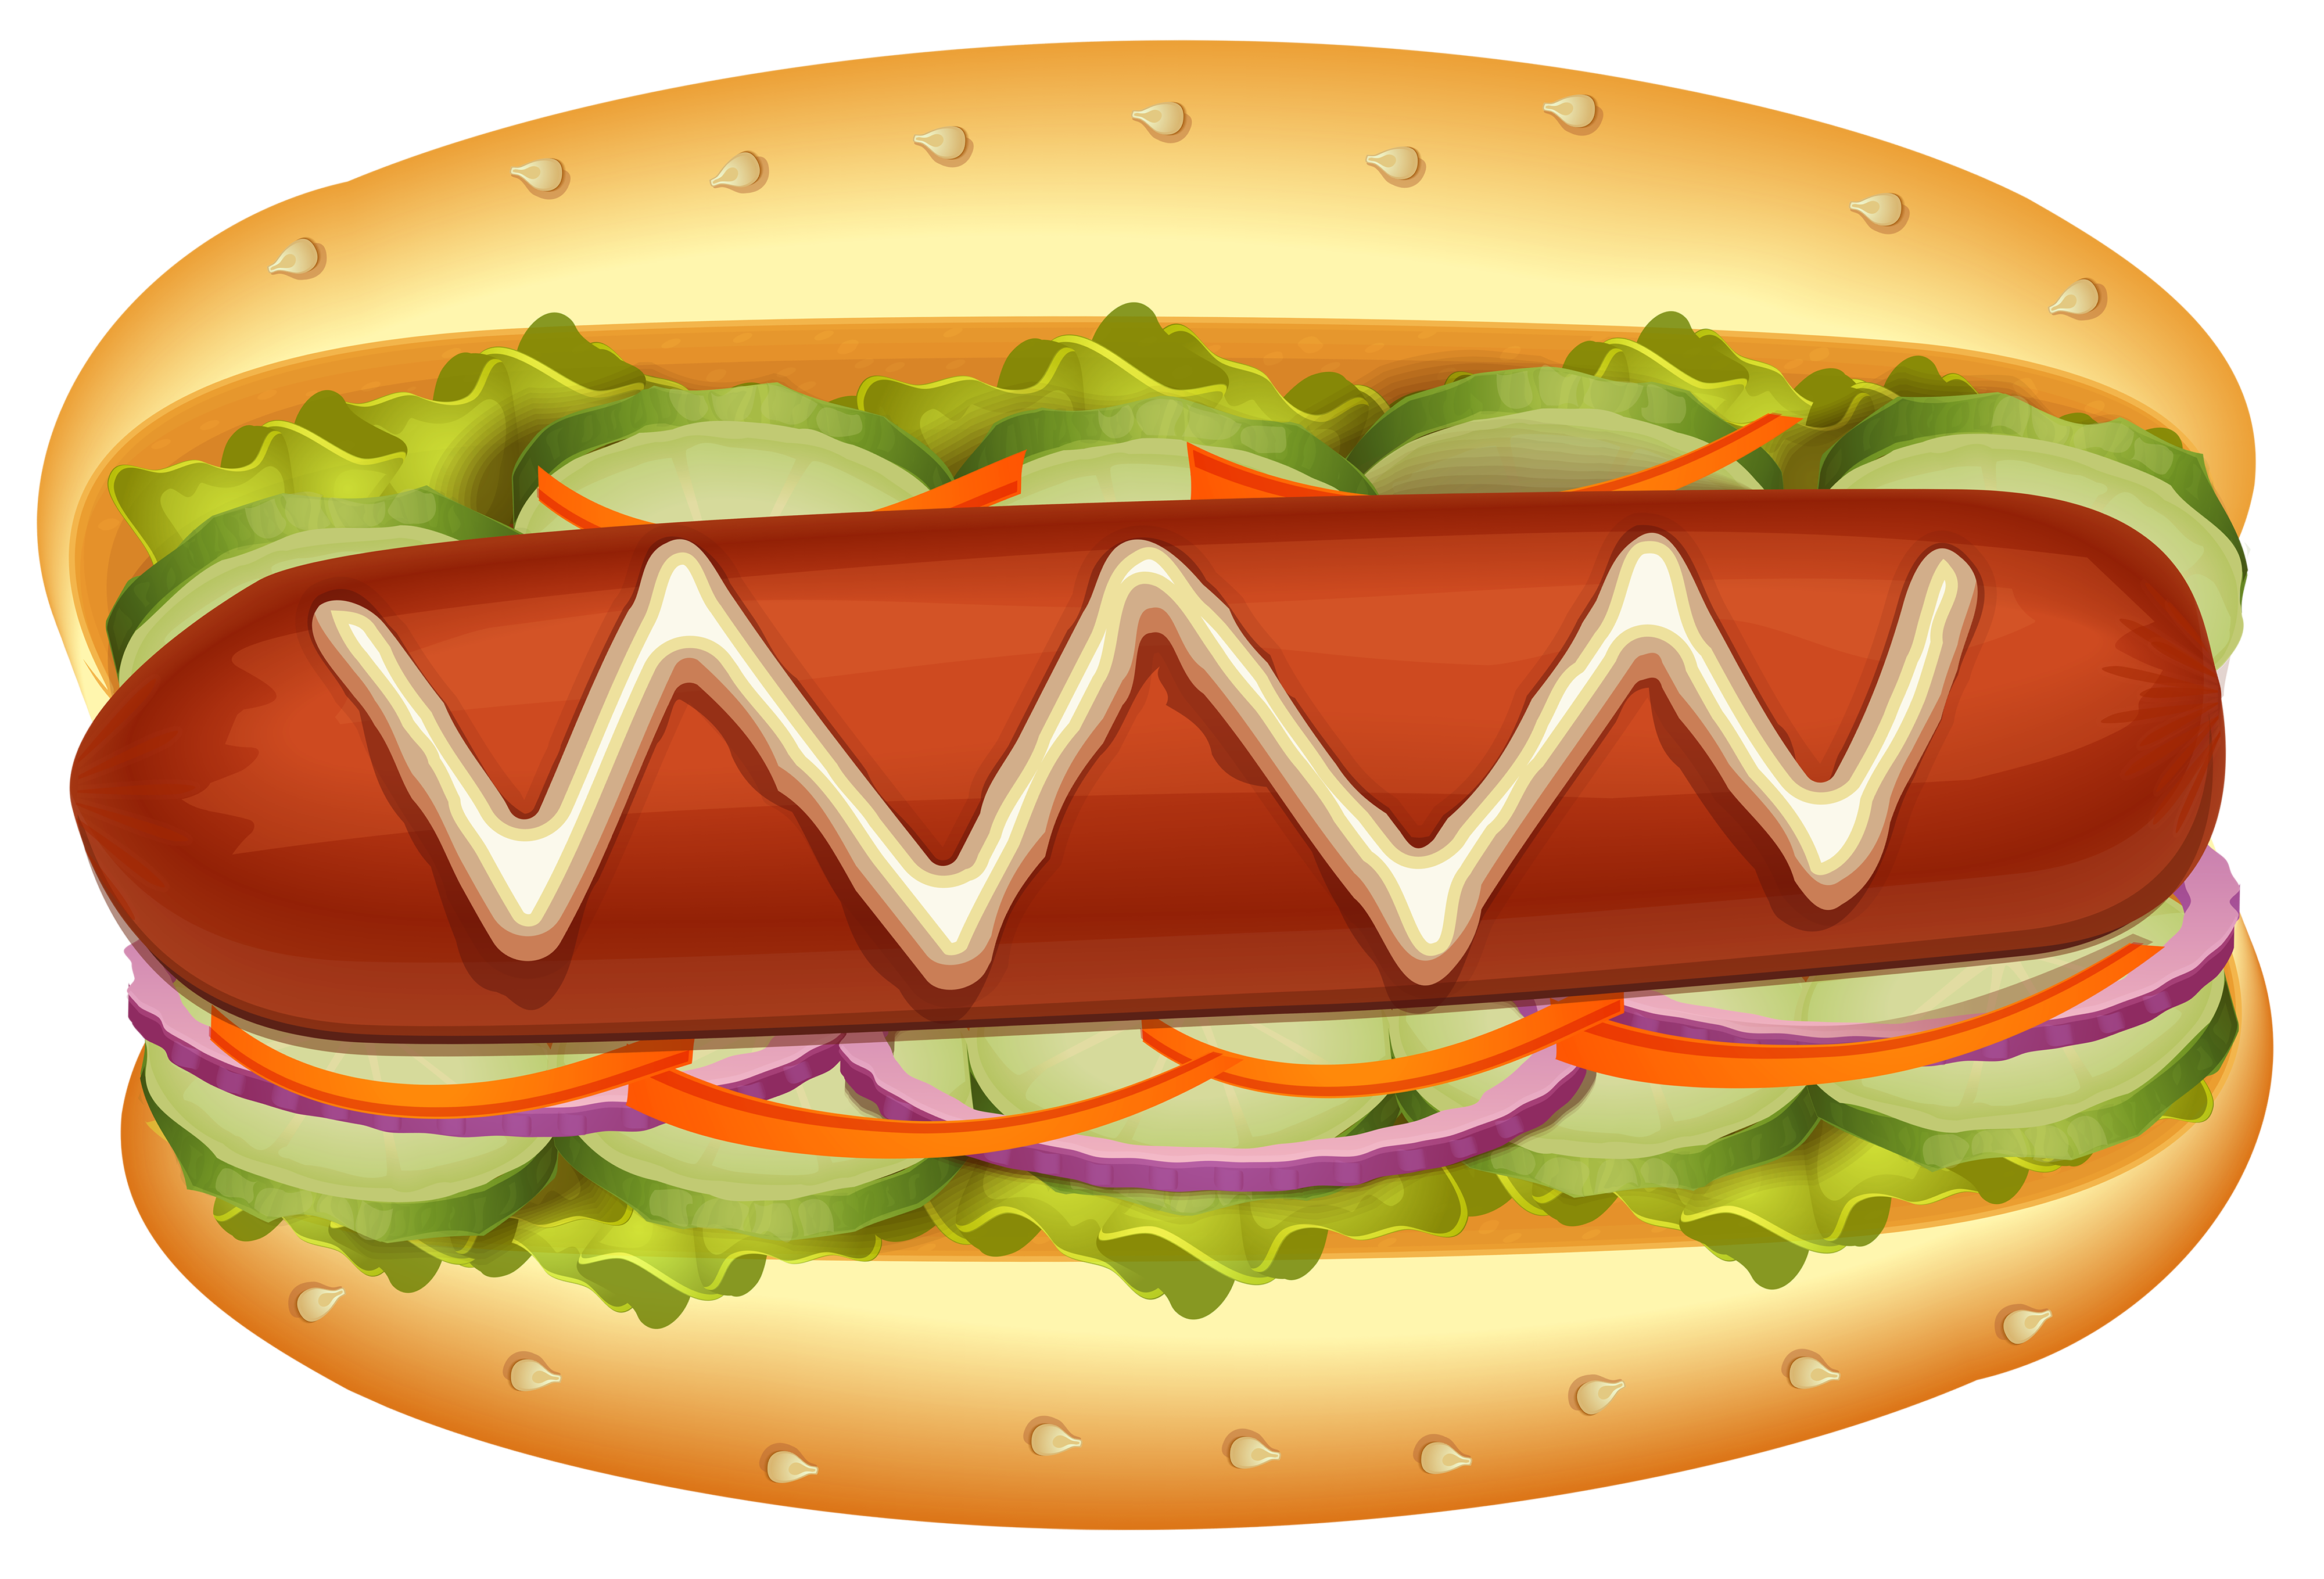 Fast food clip art salad clipart free download.